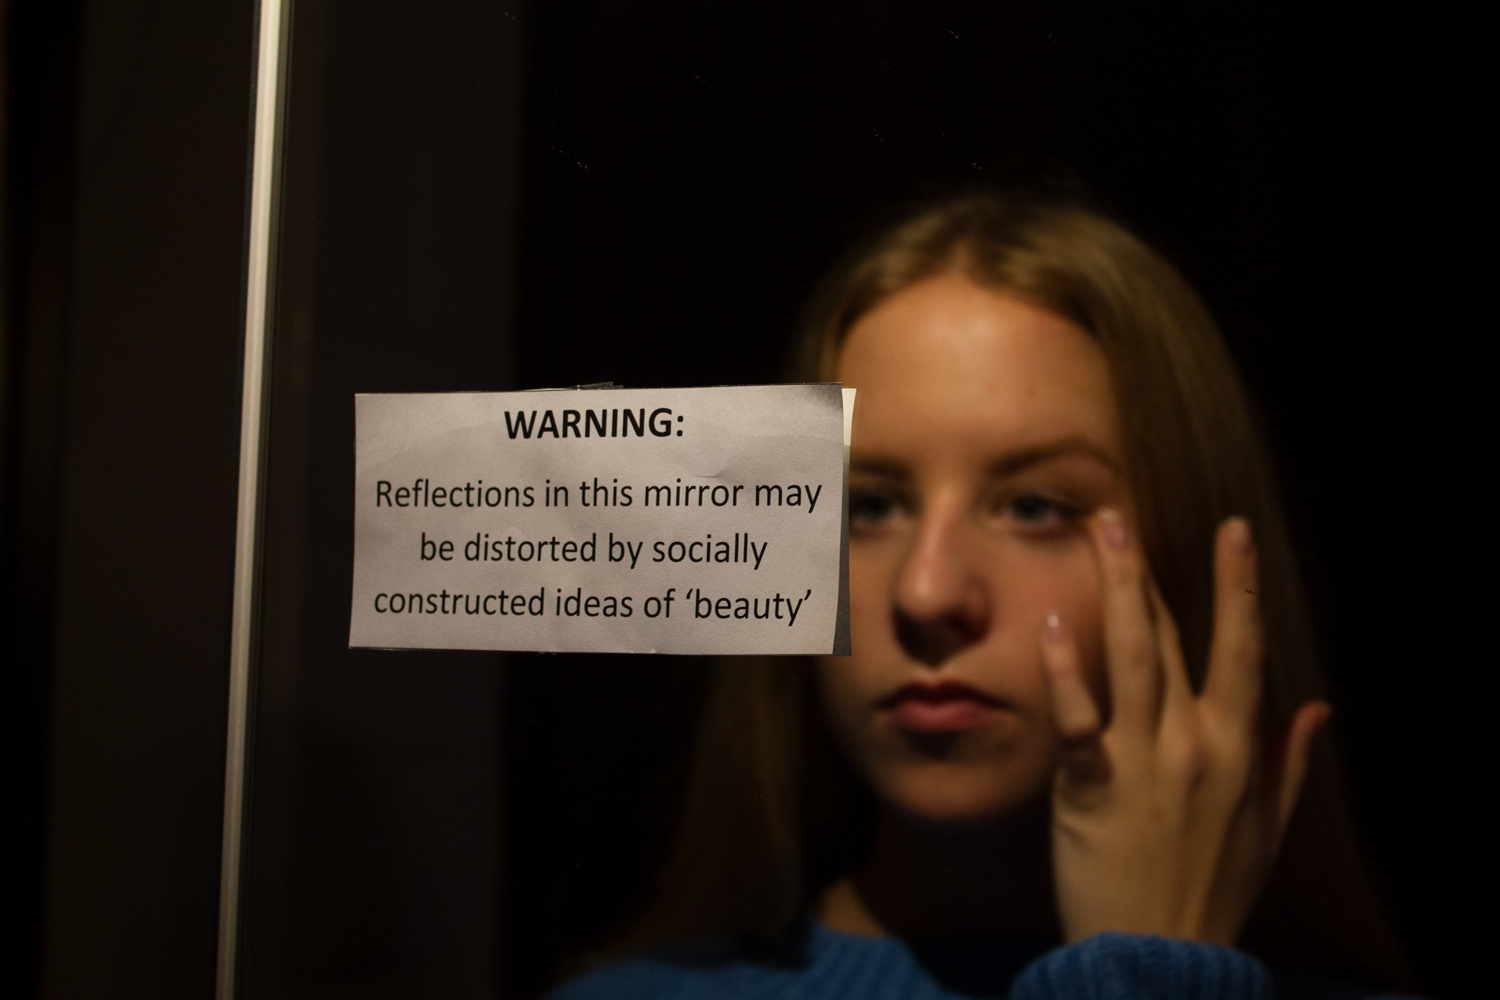 girl looking in mirror